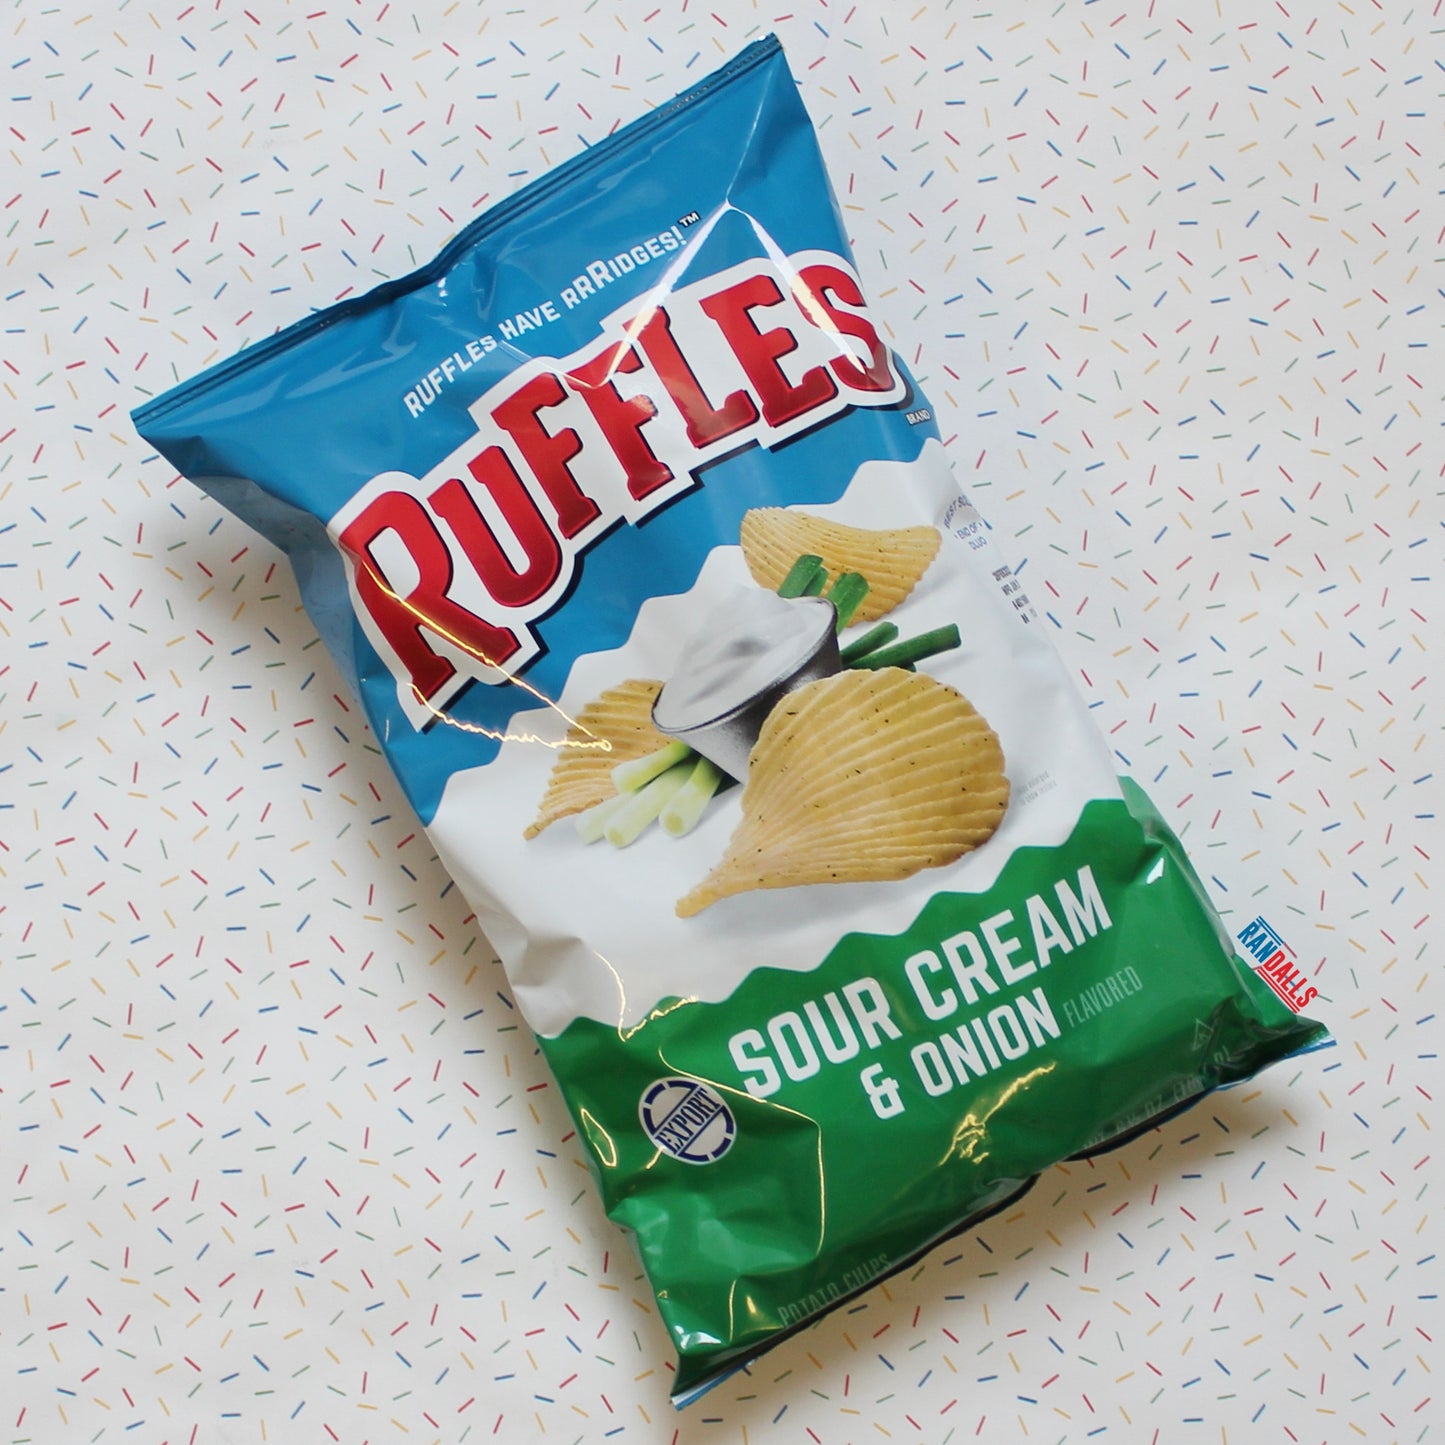 ruffles sour cream and onion, crisps, chips, potato chips, ridged crisps, usa, randalls